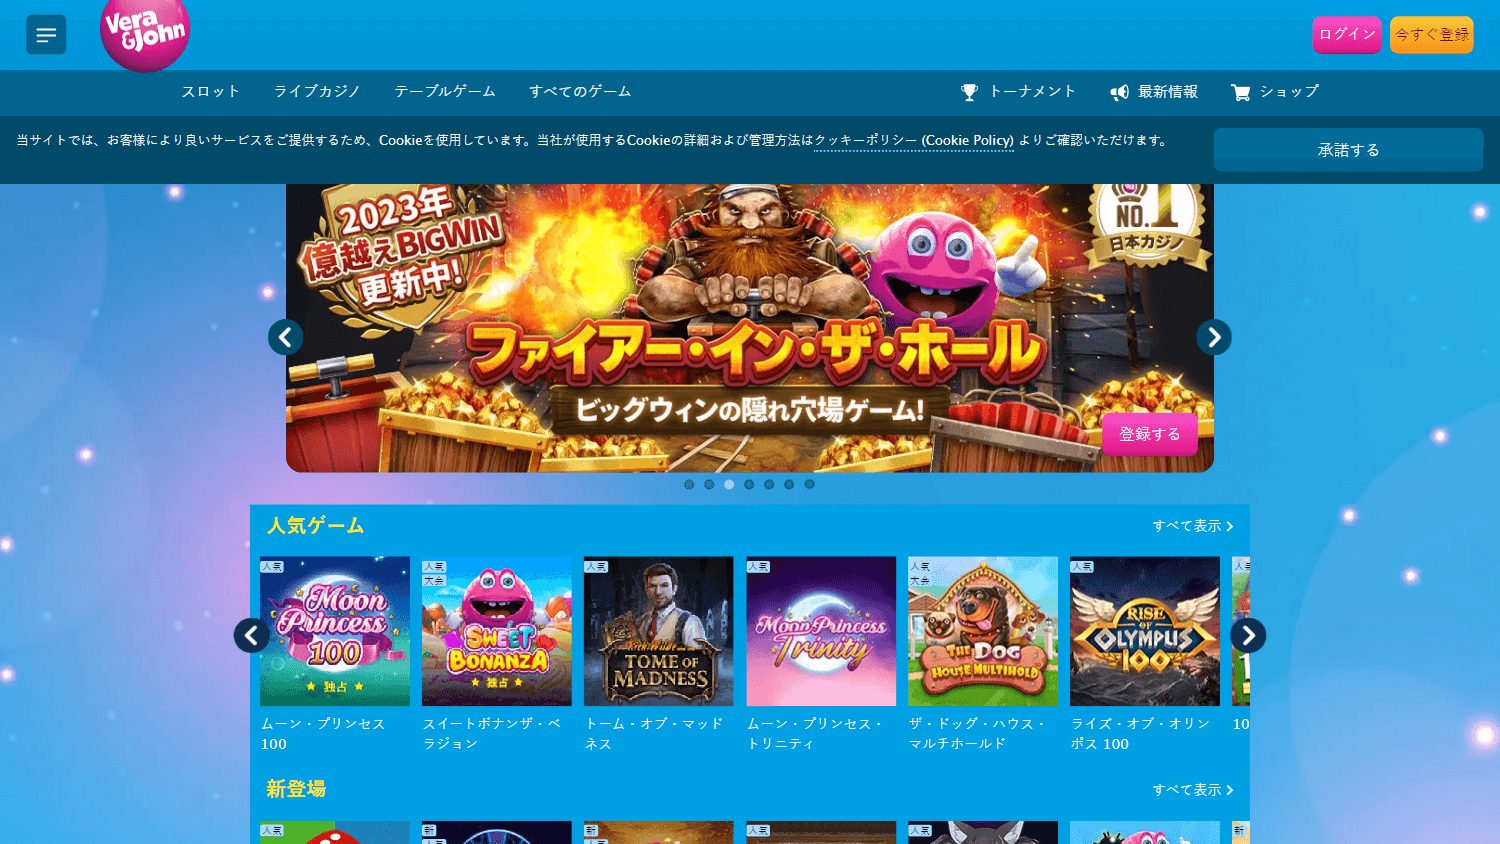 vera&john_casino_jp_homepage_desktop